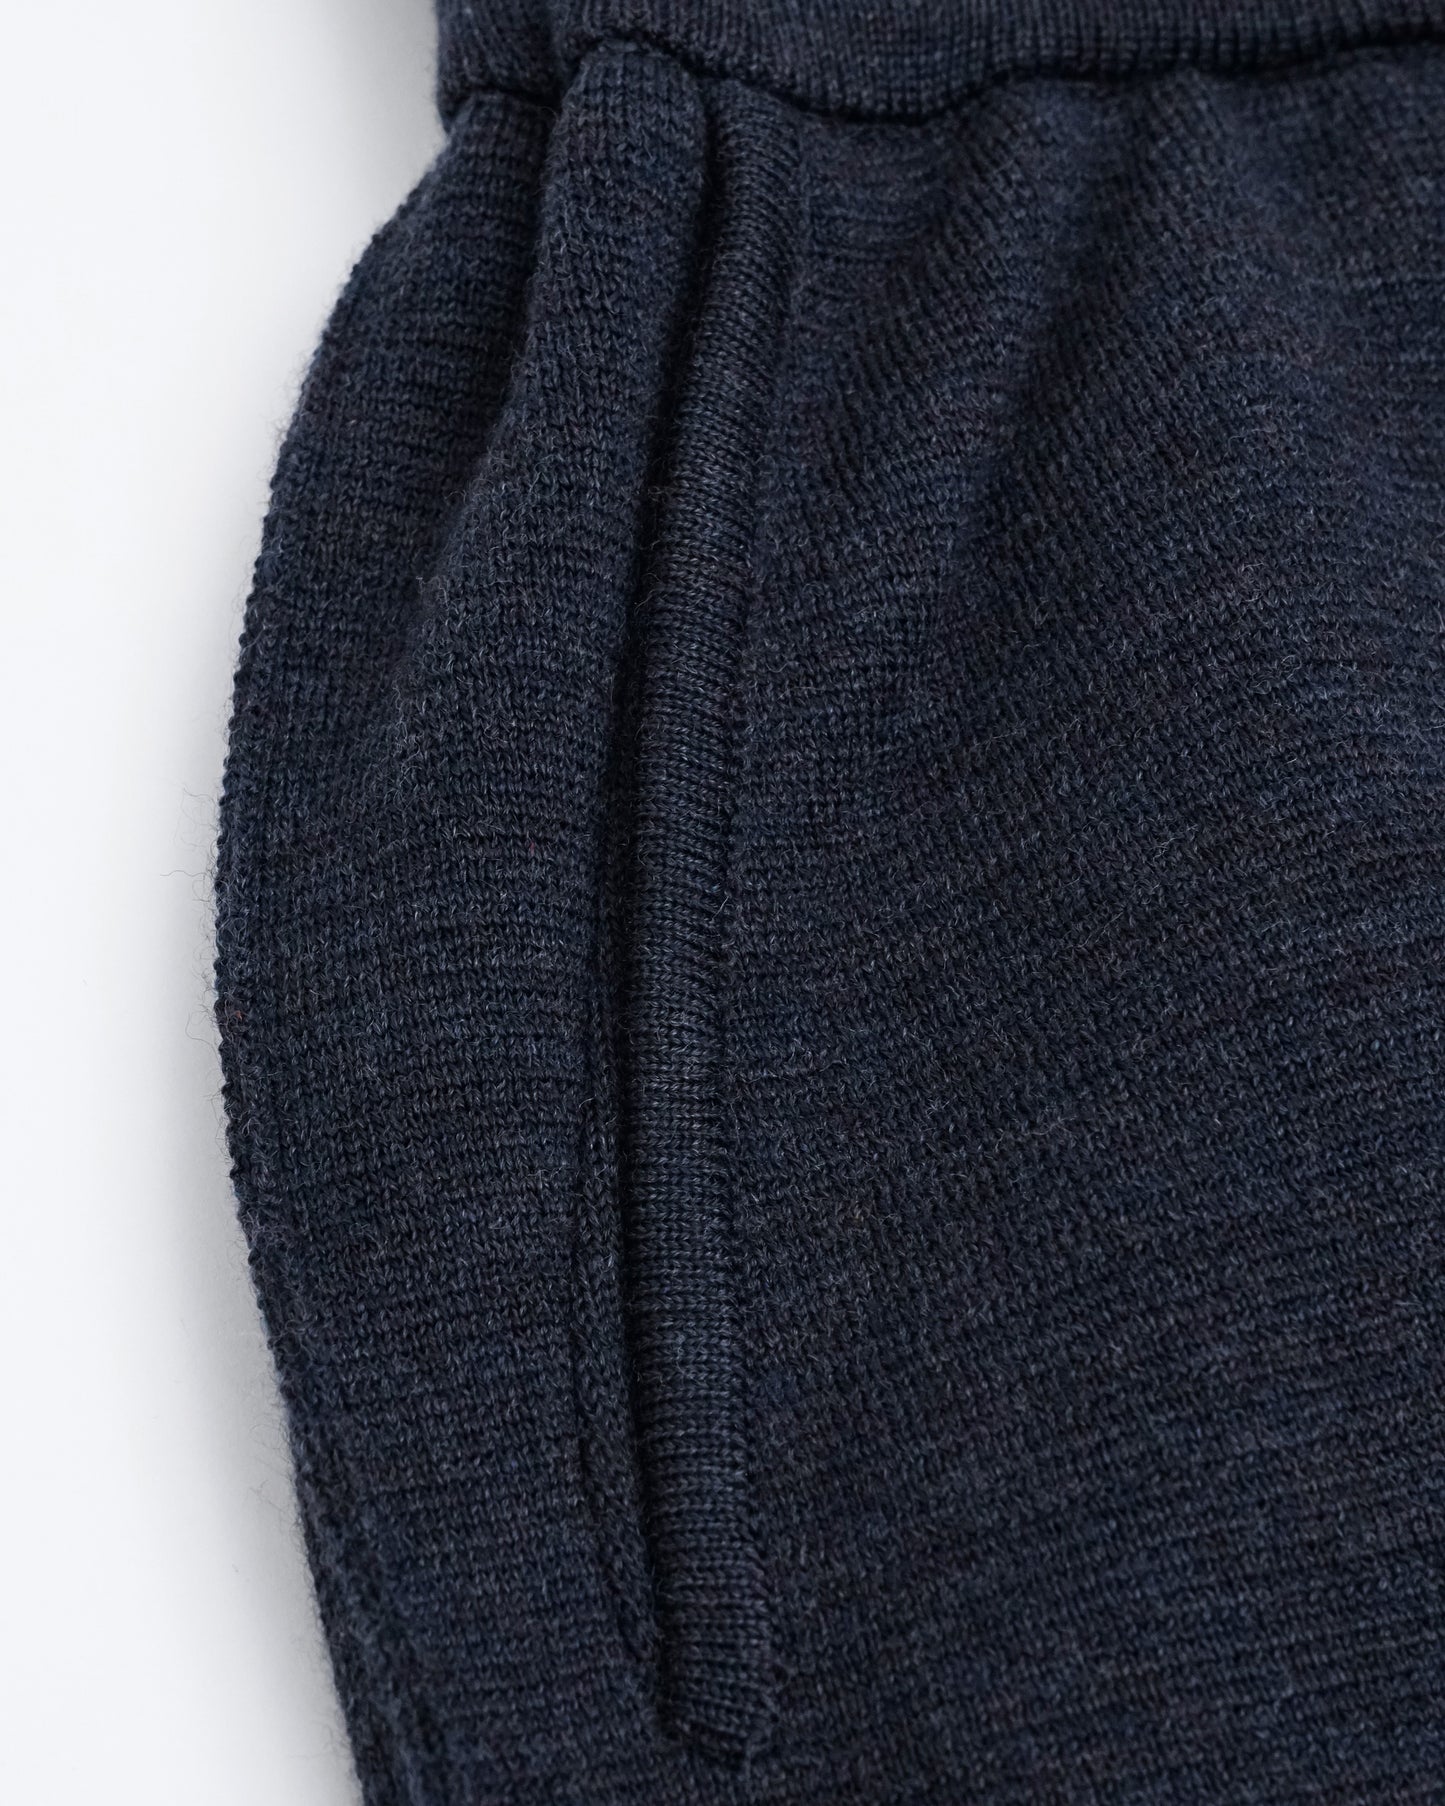 Bicolour Knit Pants(Navy×White)